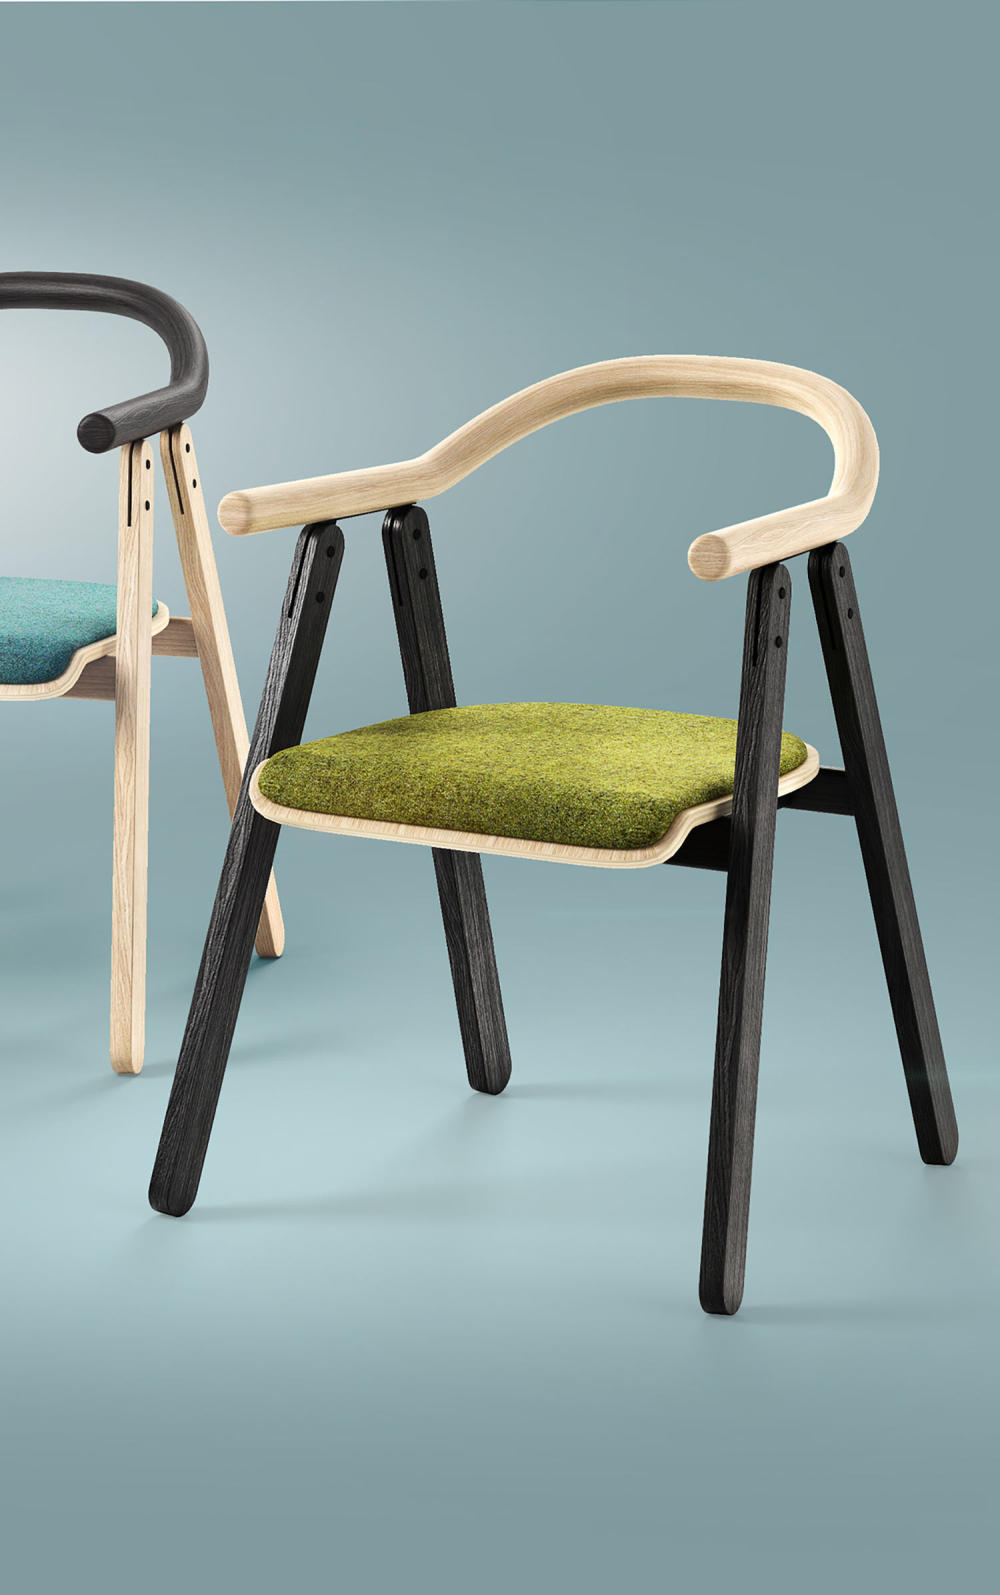 toon_chair_by_radek_nowakowski_for_redo_design_gessato_blog_7.jpg